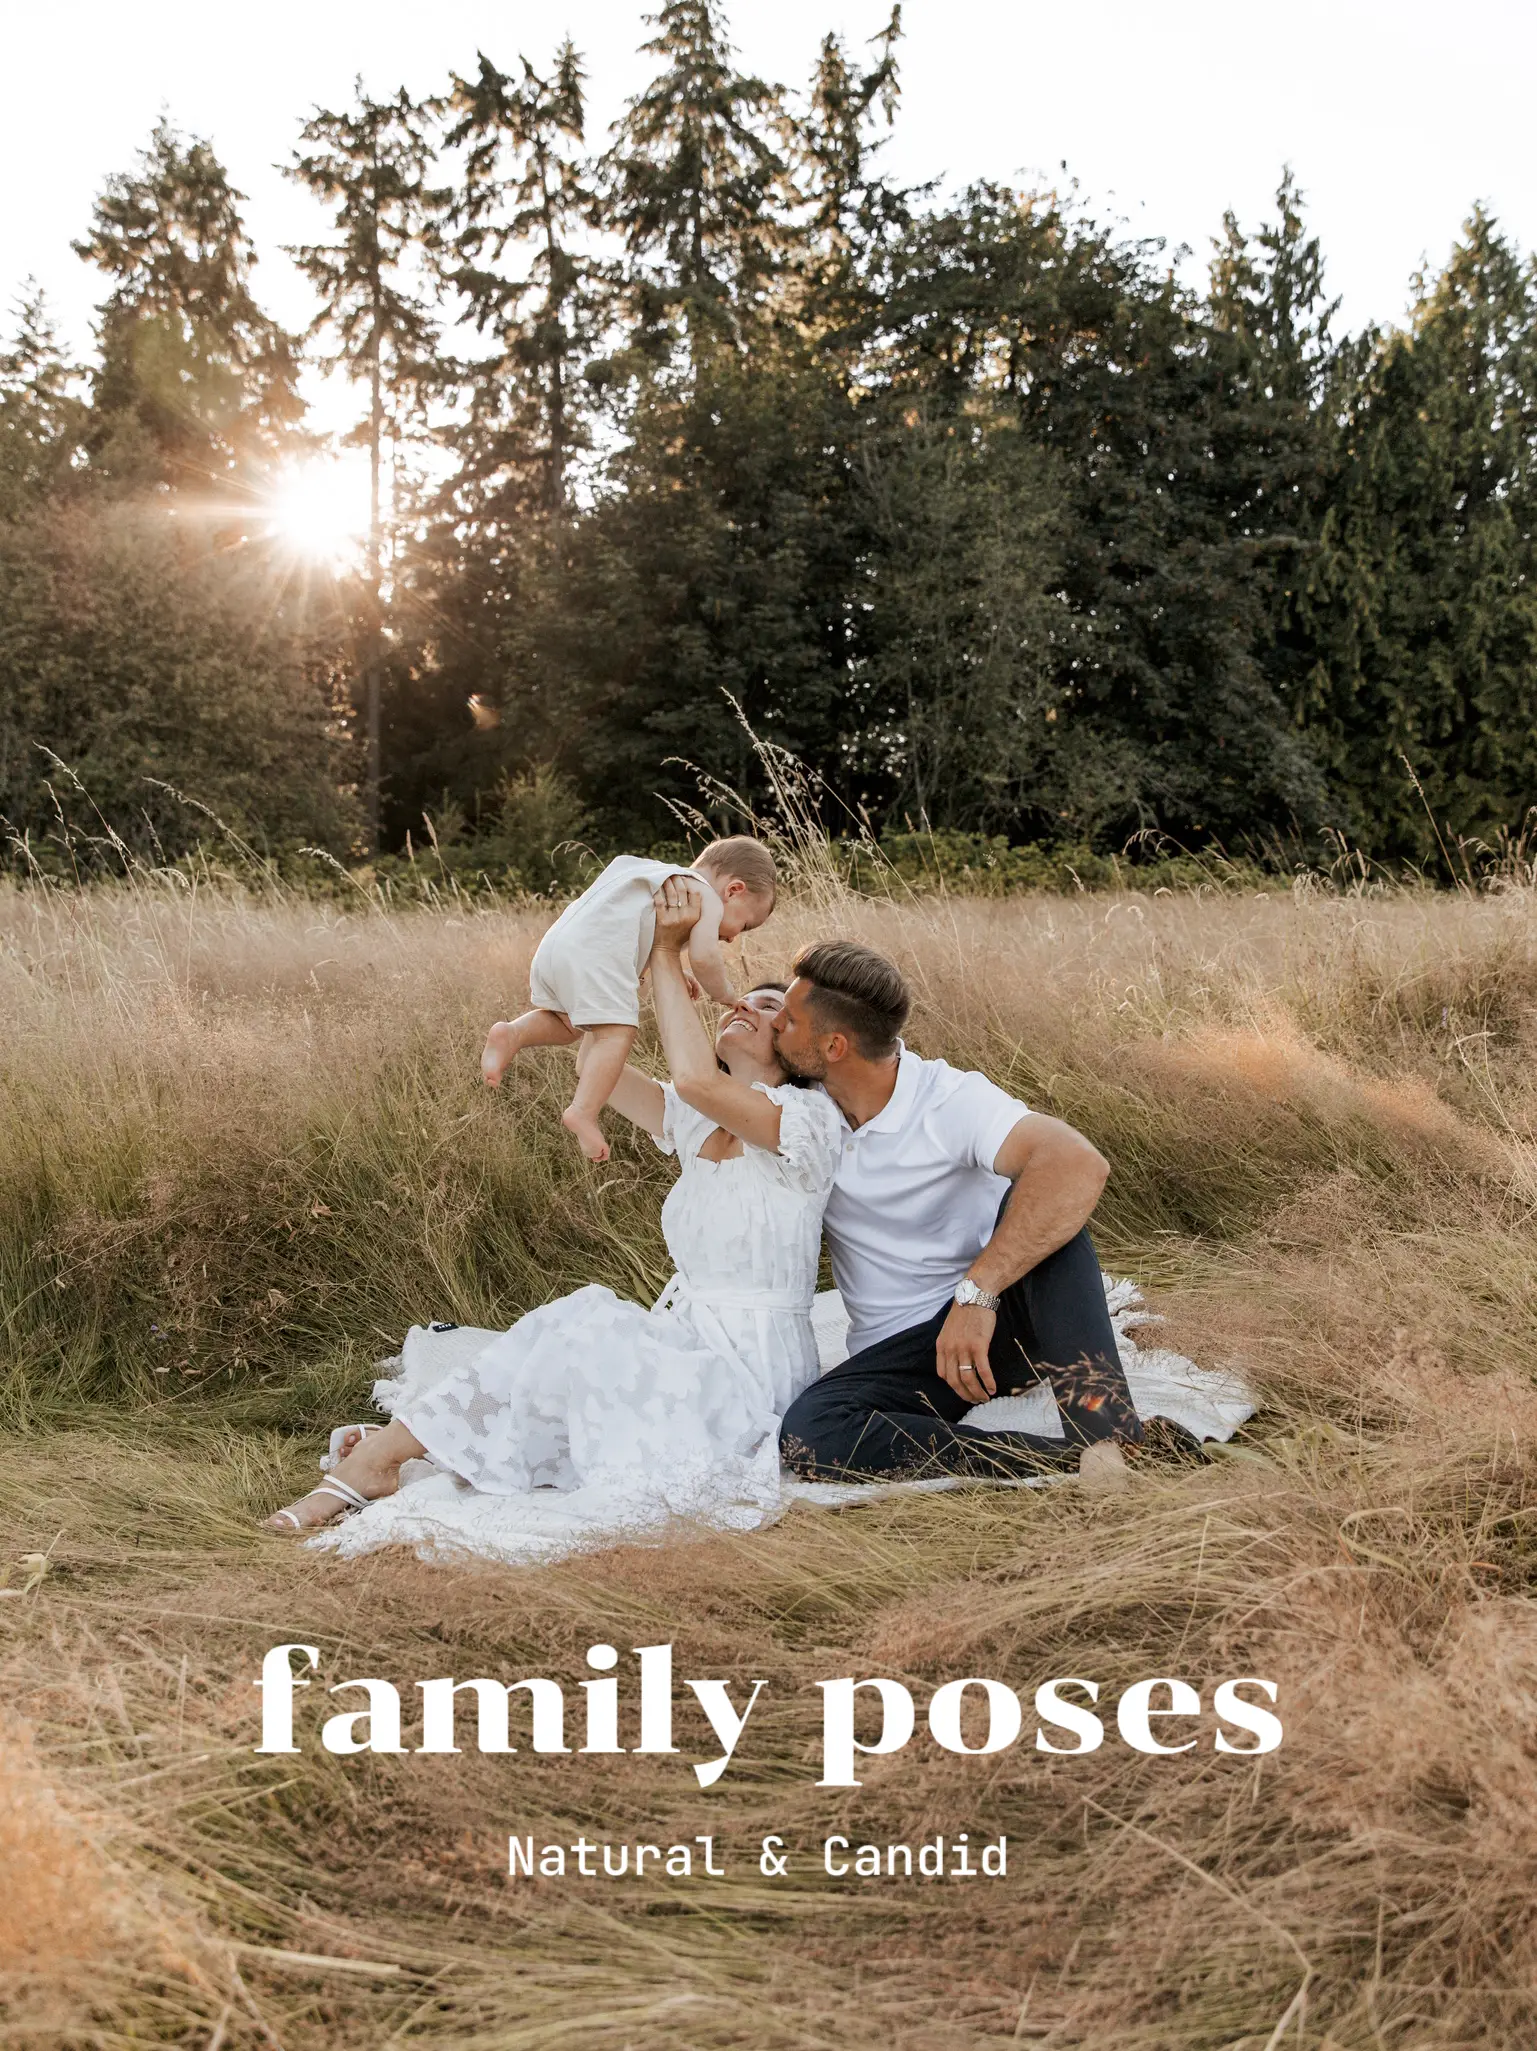 Personalized Family Photo Shoot Ideas - Lemon8 Search